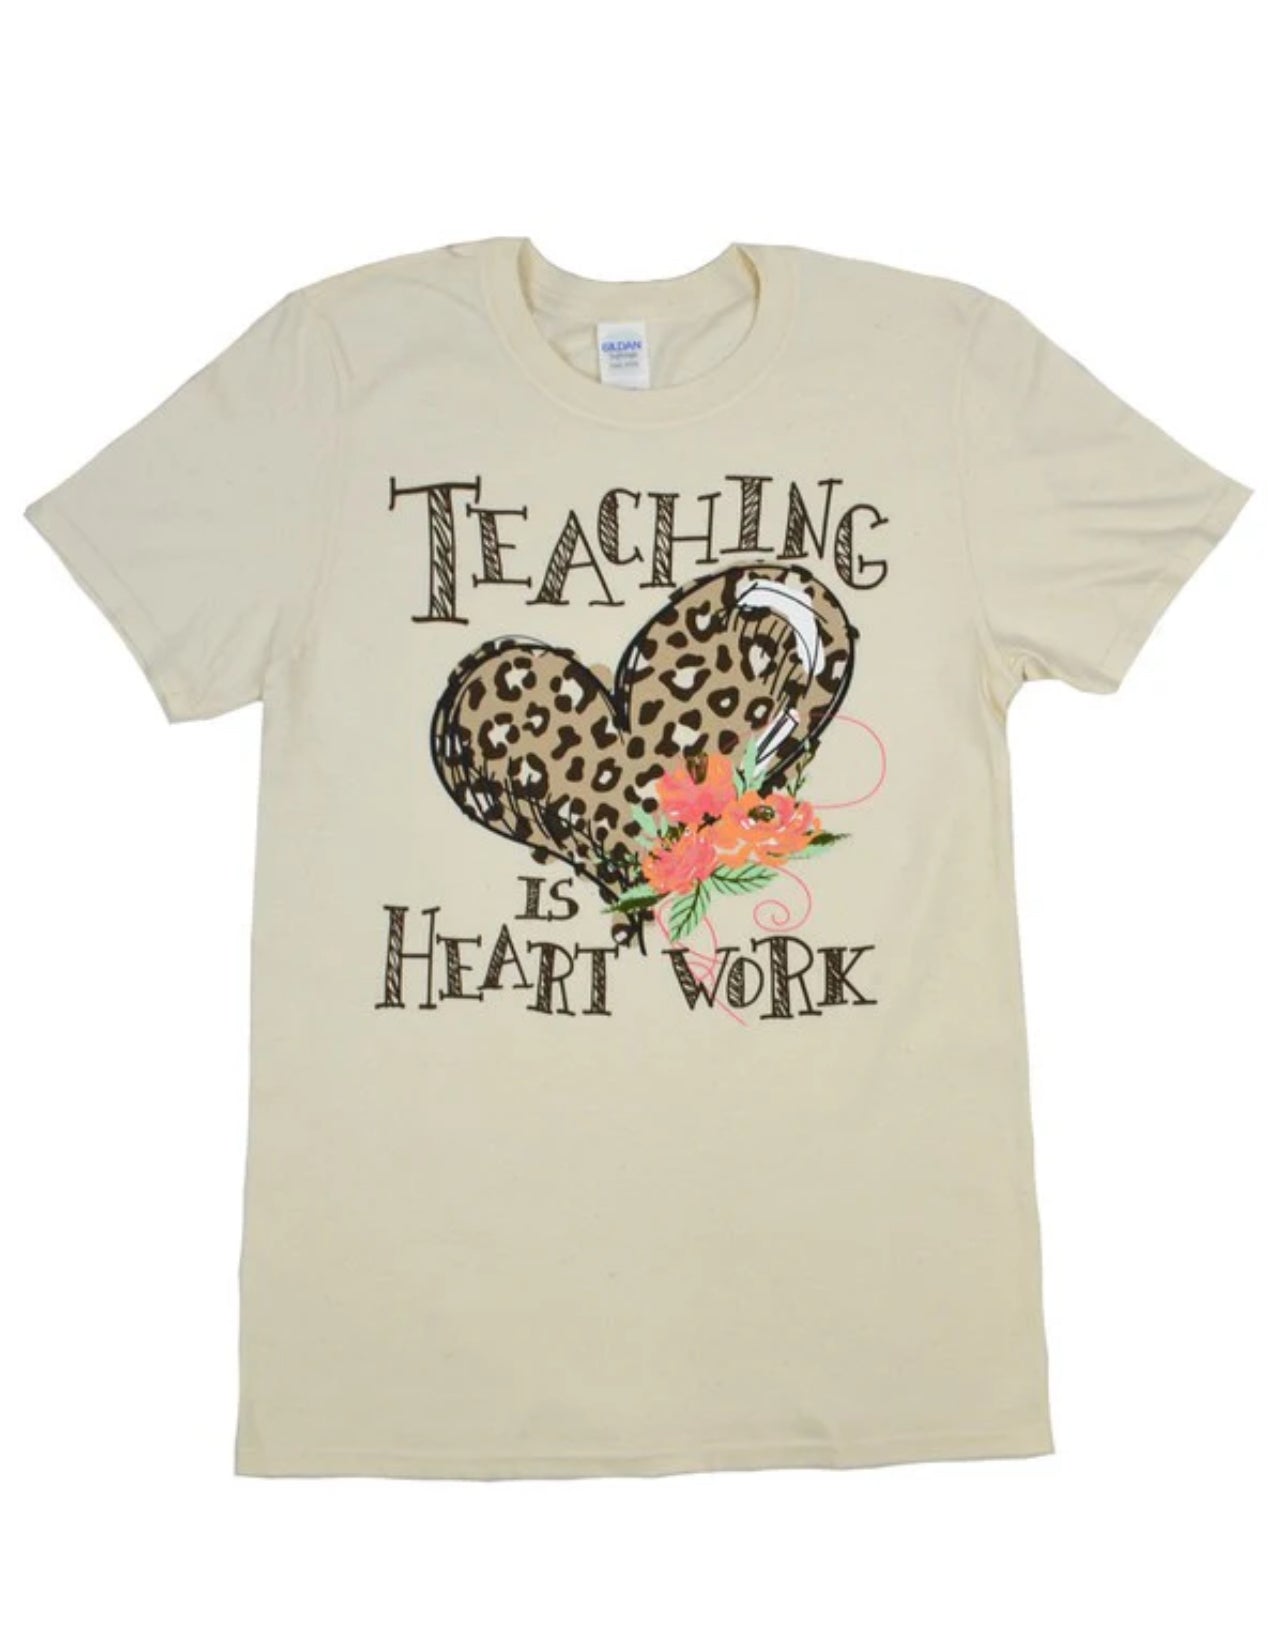 Teaching Is Heart Work Graphic Tee